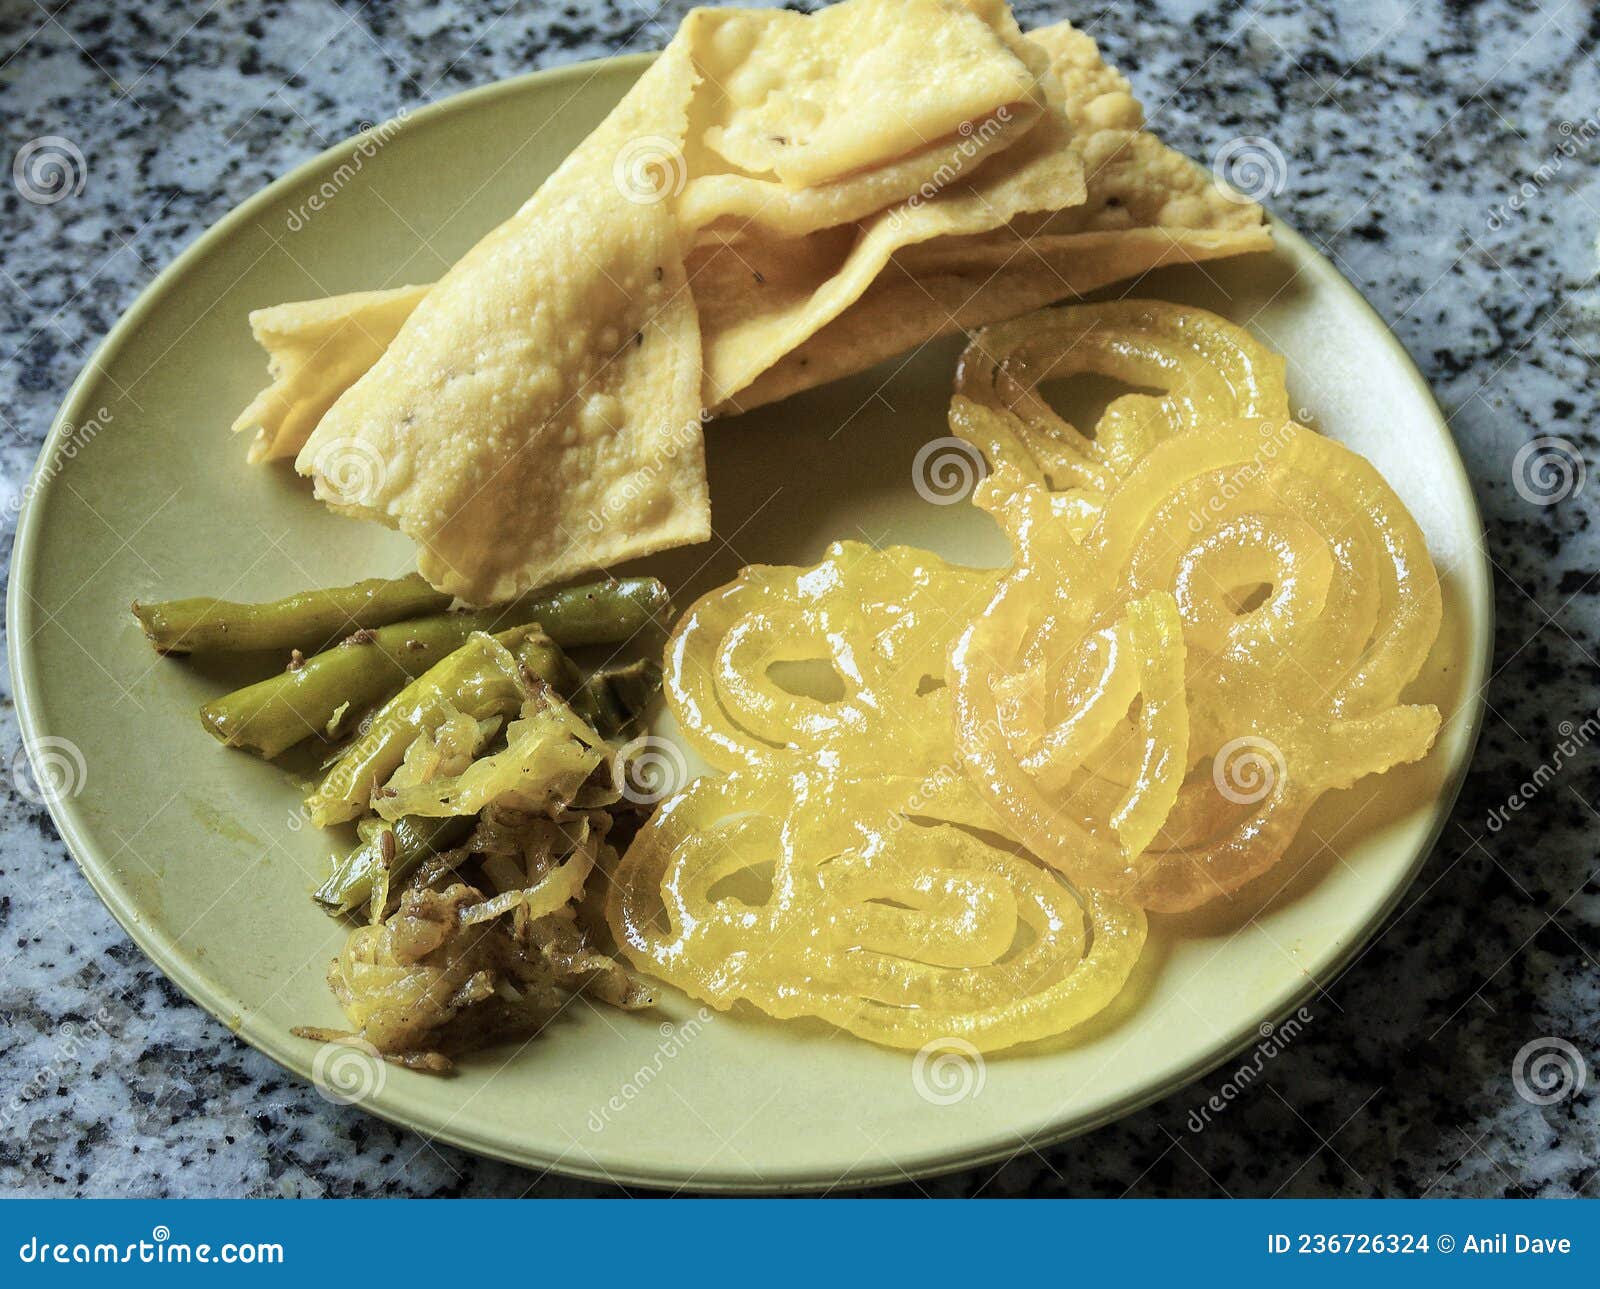 for dasara kesari jalebi fafda a savory items and papaya chutney